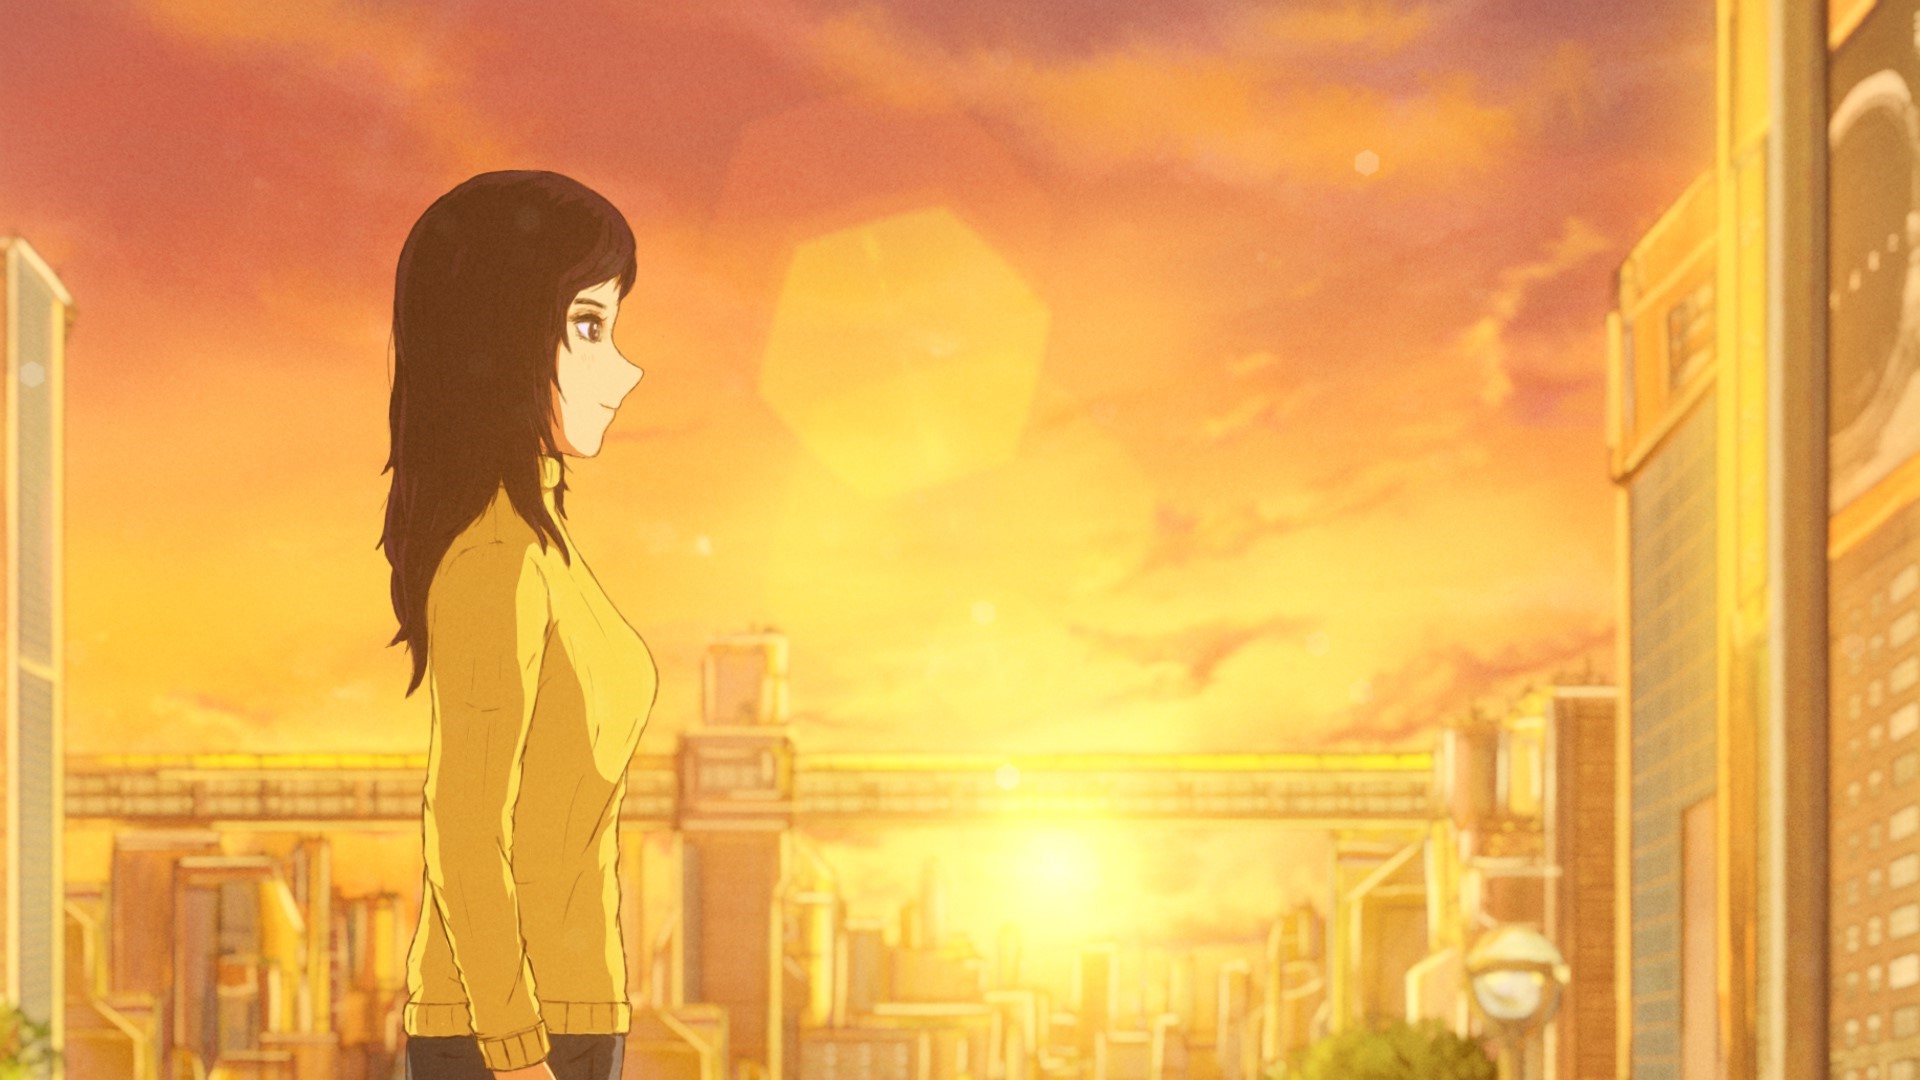 Anime 1920x1080 digital art anime city glowing sunset sky anime building cityscape anime girls smiling yellow sunset glow street outdoors sparkles